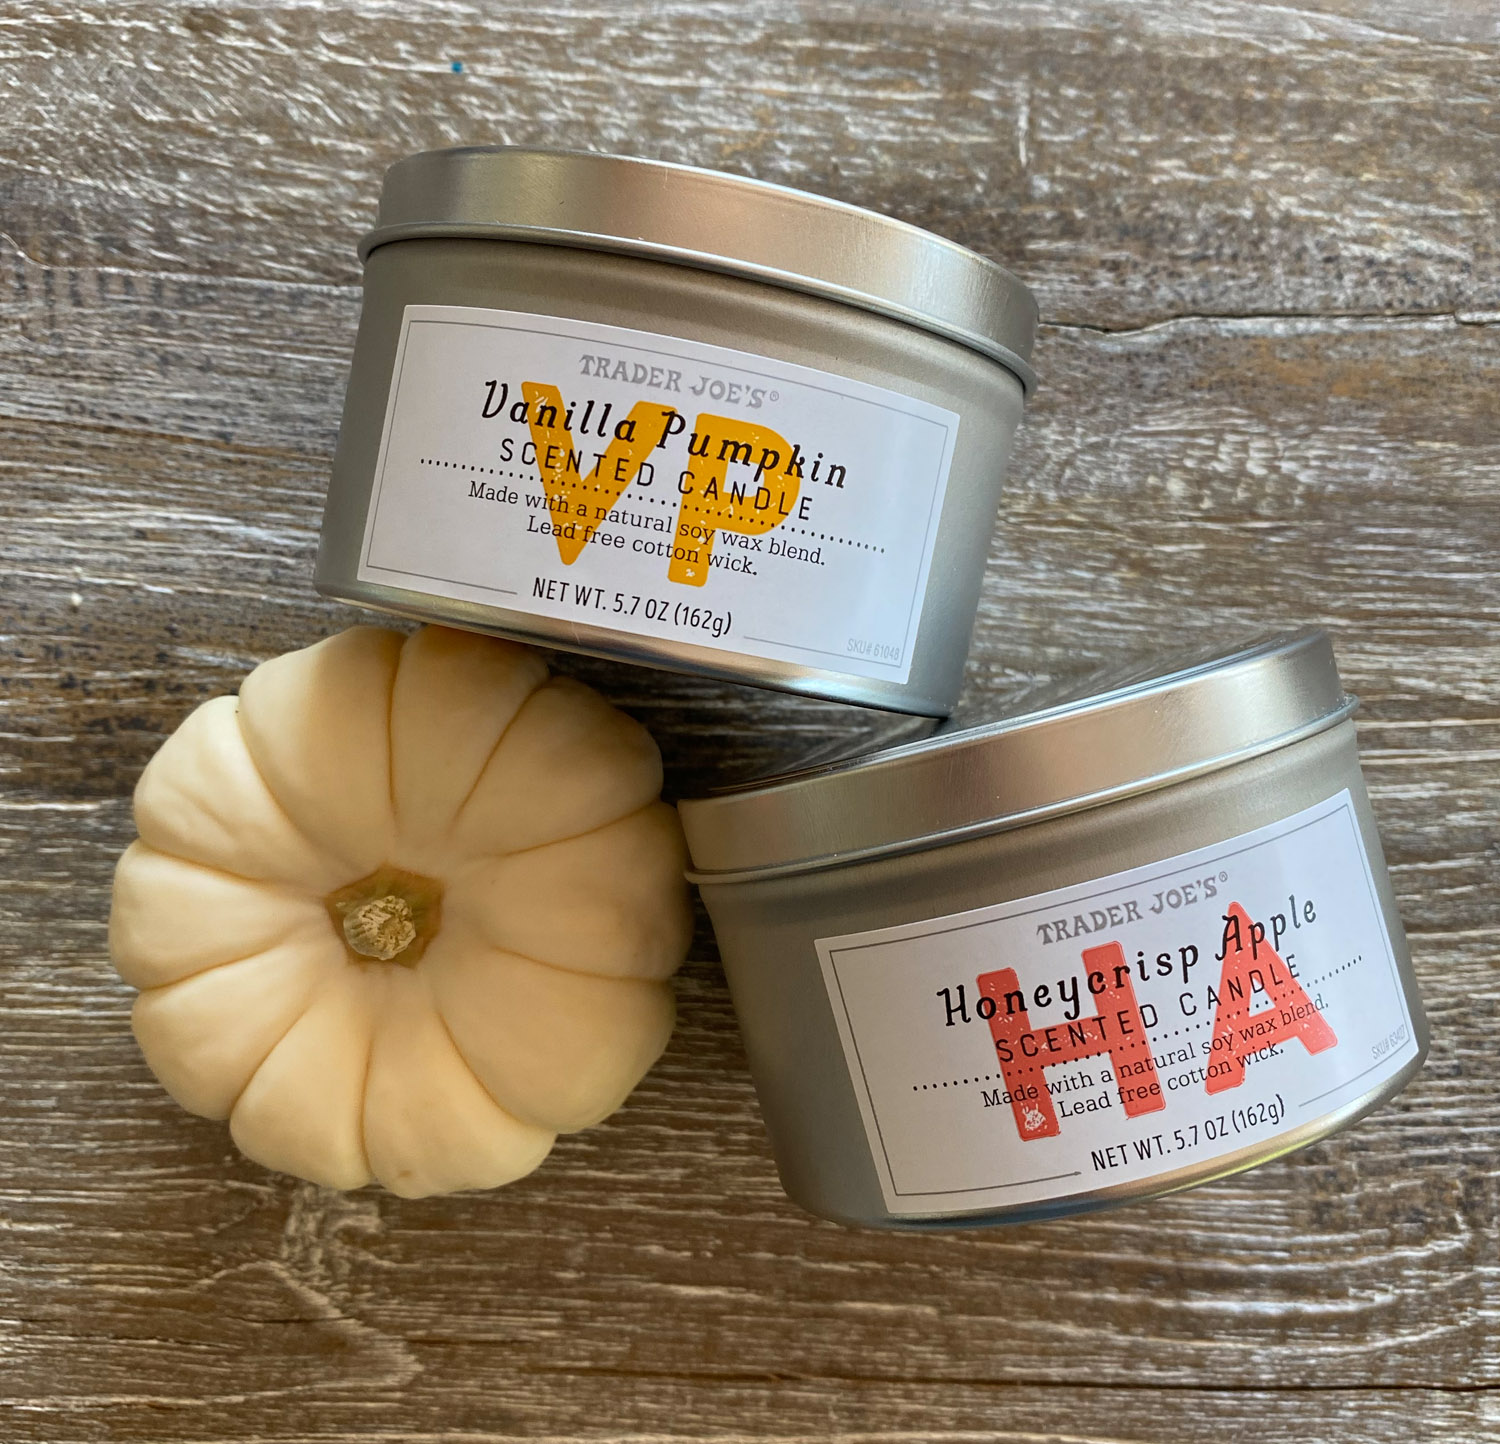 Trader Joe's Vanilla Pumpkin Candles